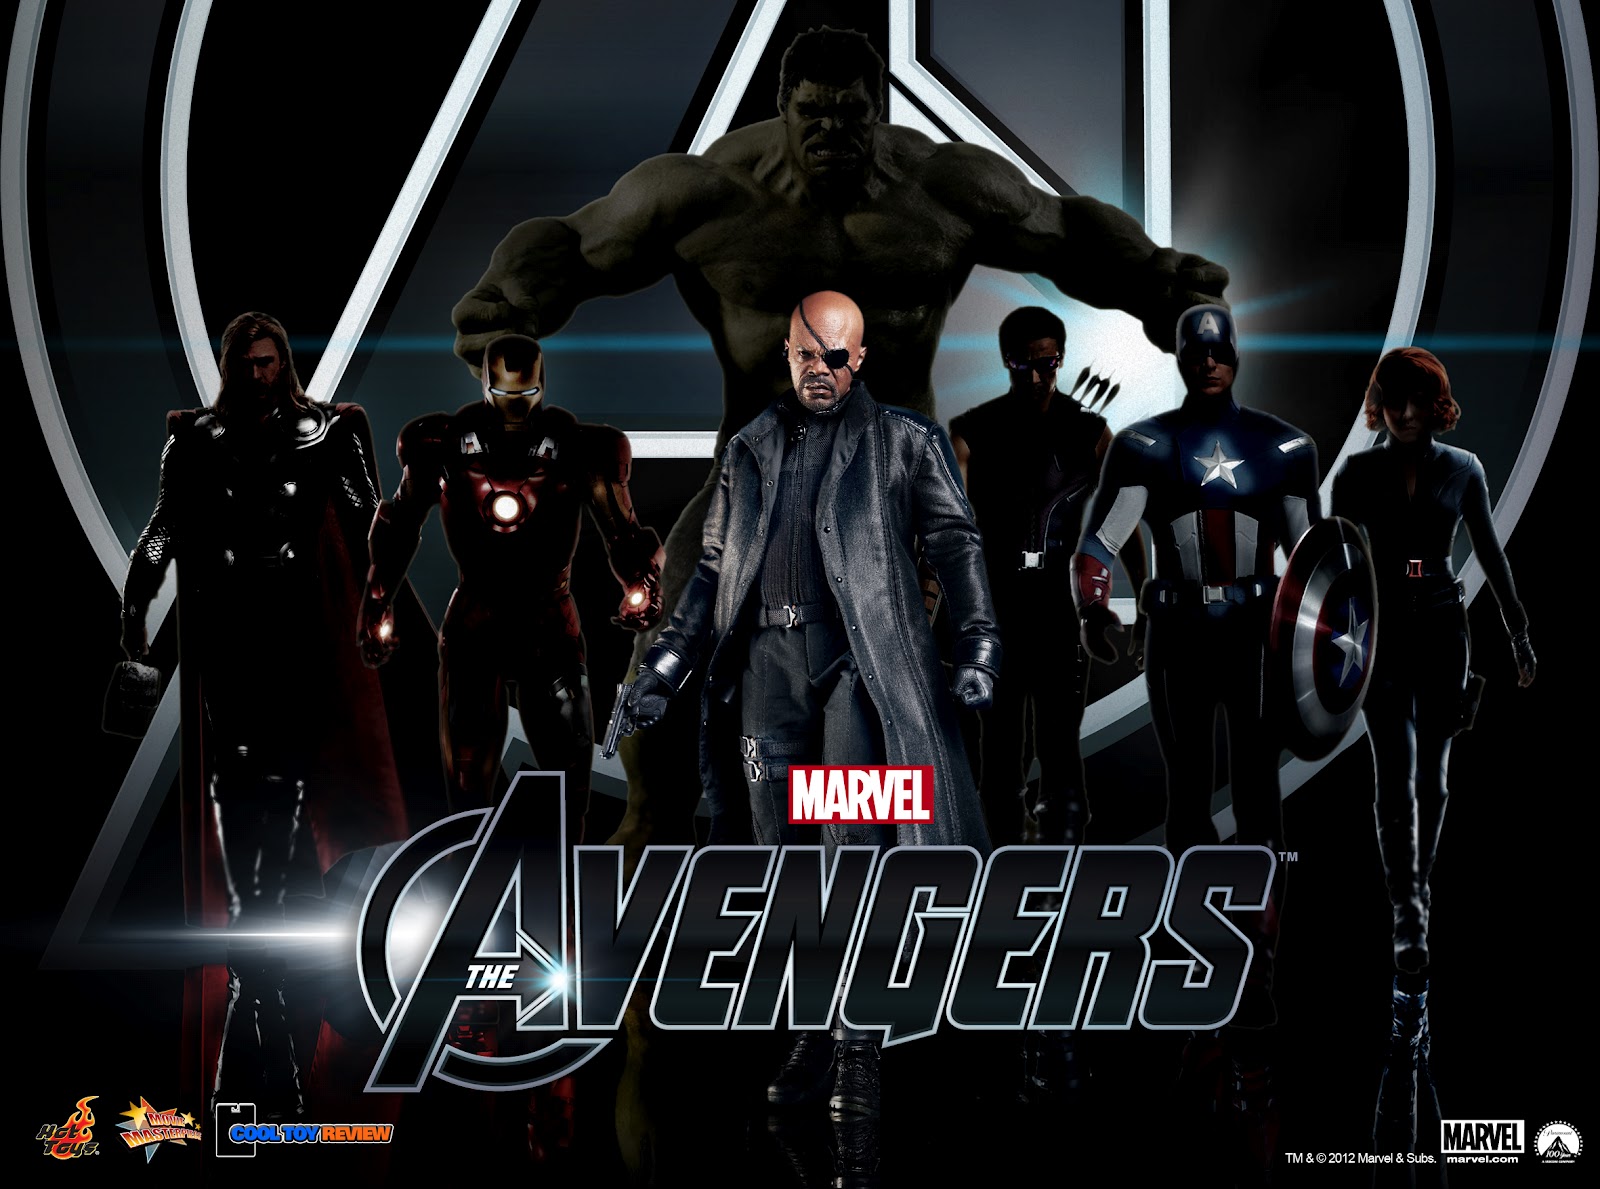 http://3.bp.blogspot.com/-ebbcG5Az0UA/T0PTCMpqXkI/AAAAAAAAB5I/IpUQfxfZe_0/s1600/Hot_Toys_Avengers_Teaser.jpg